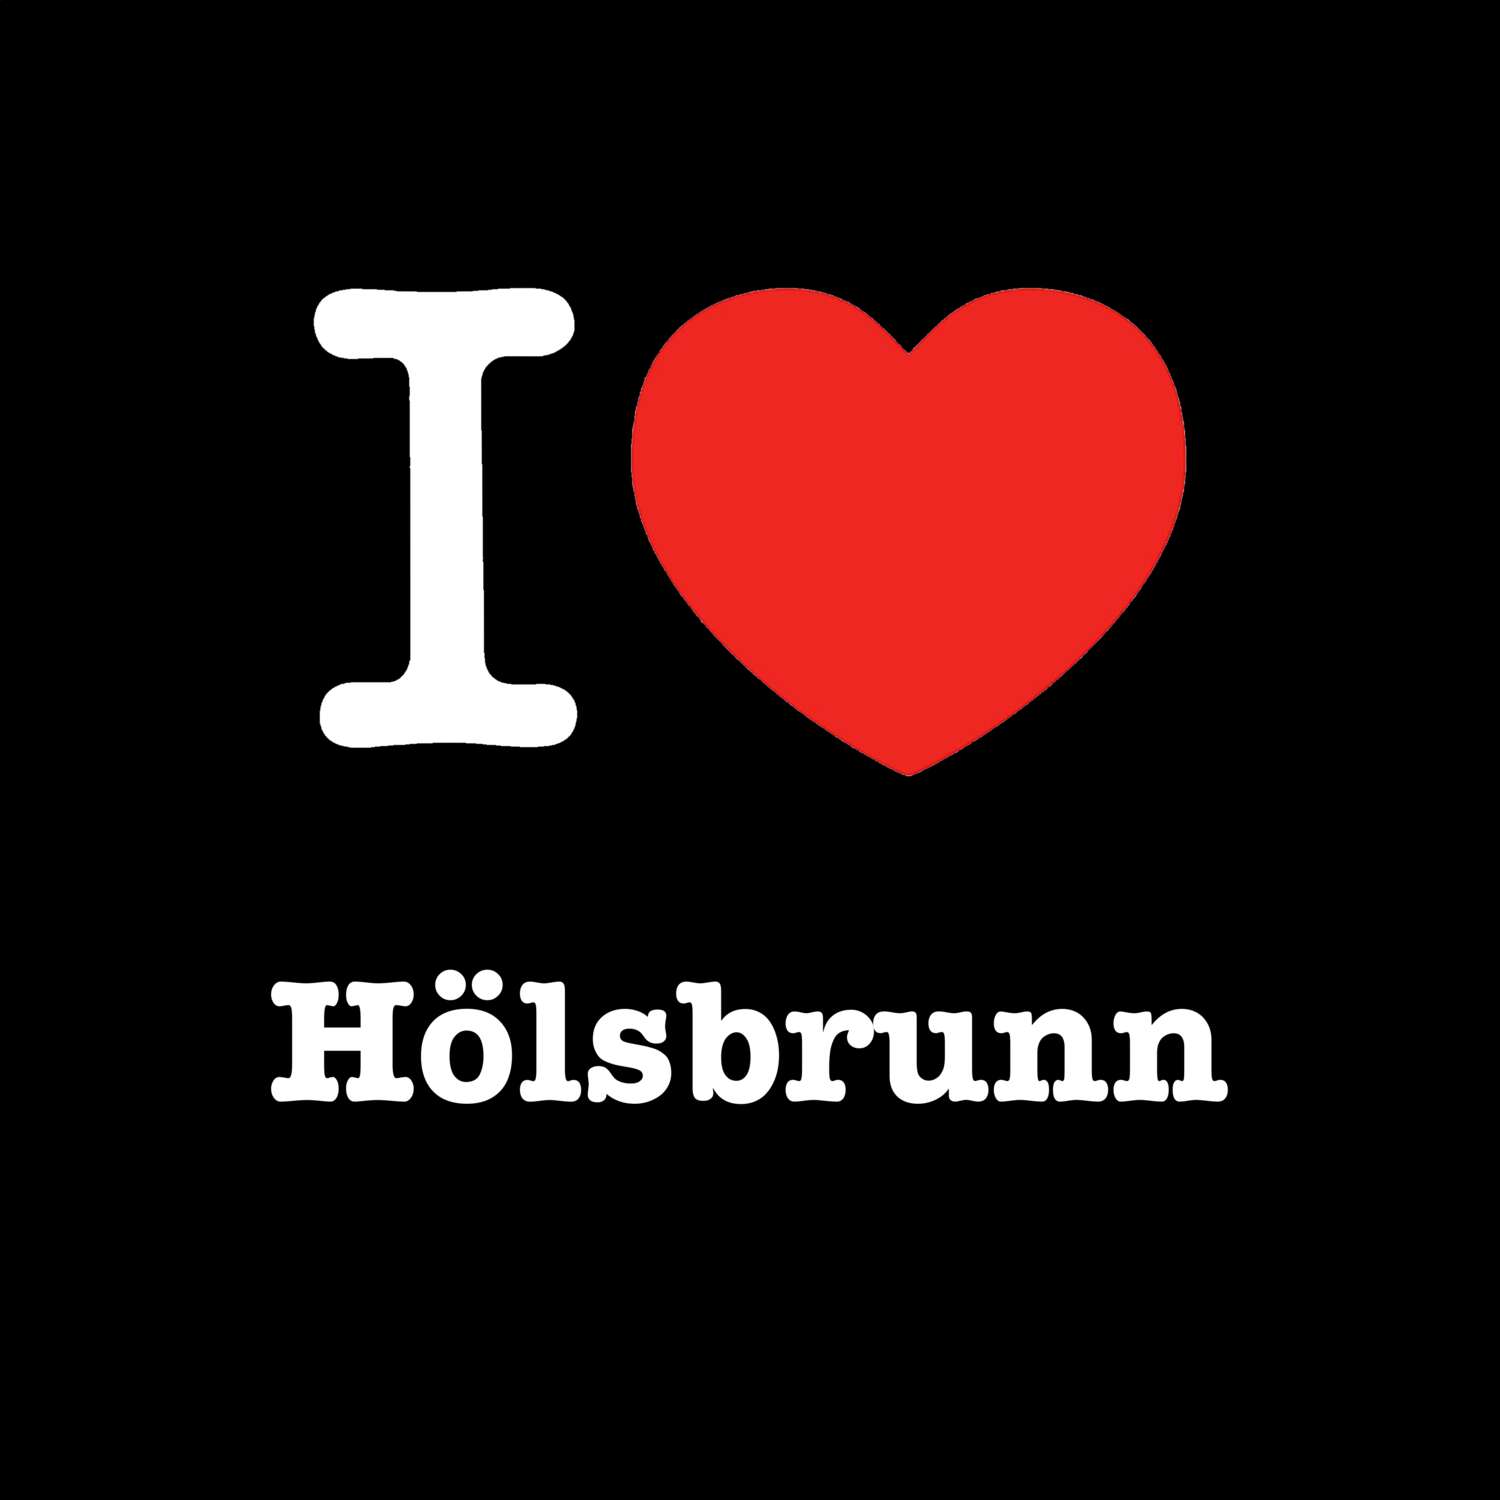 Hölsbrunn T-Shirt »I love«